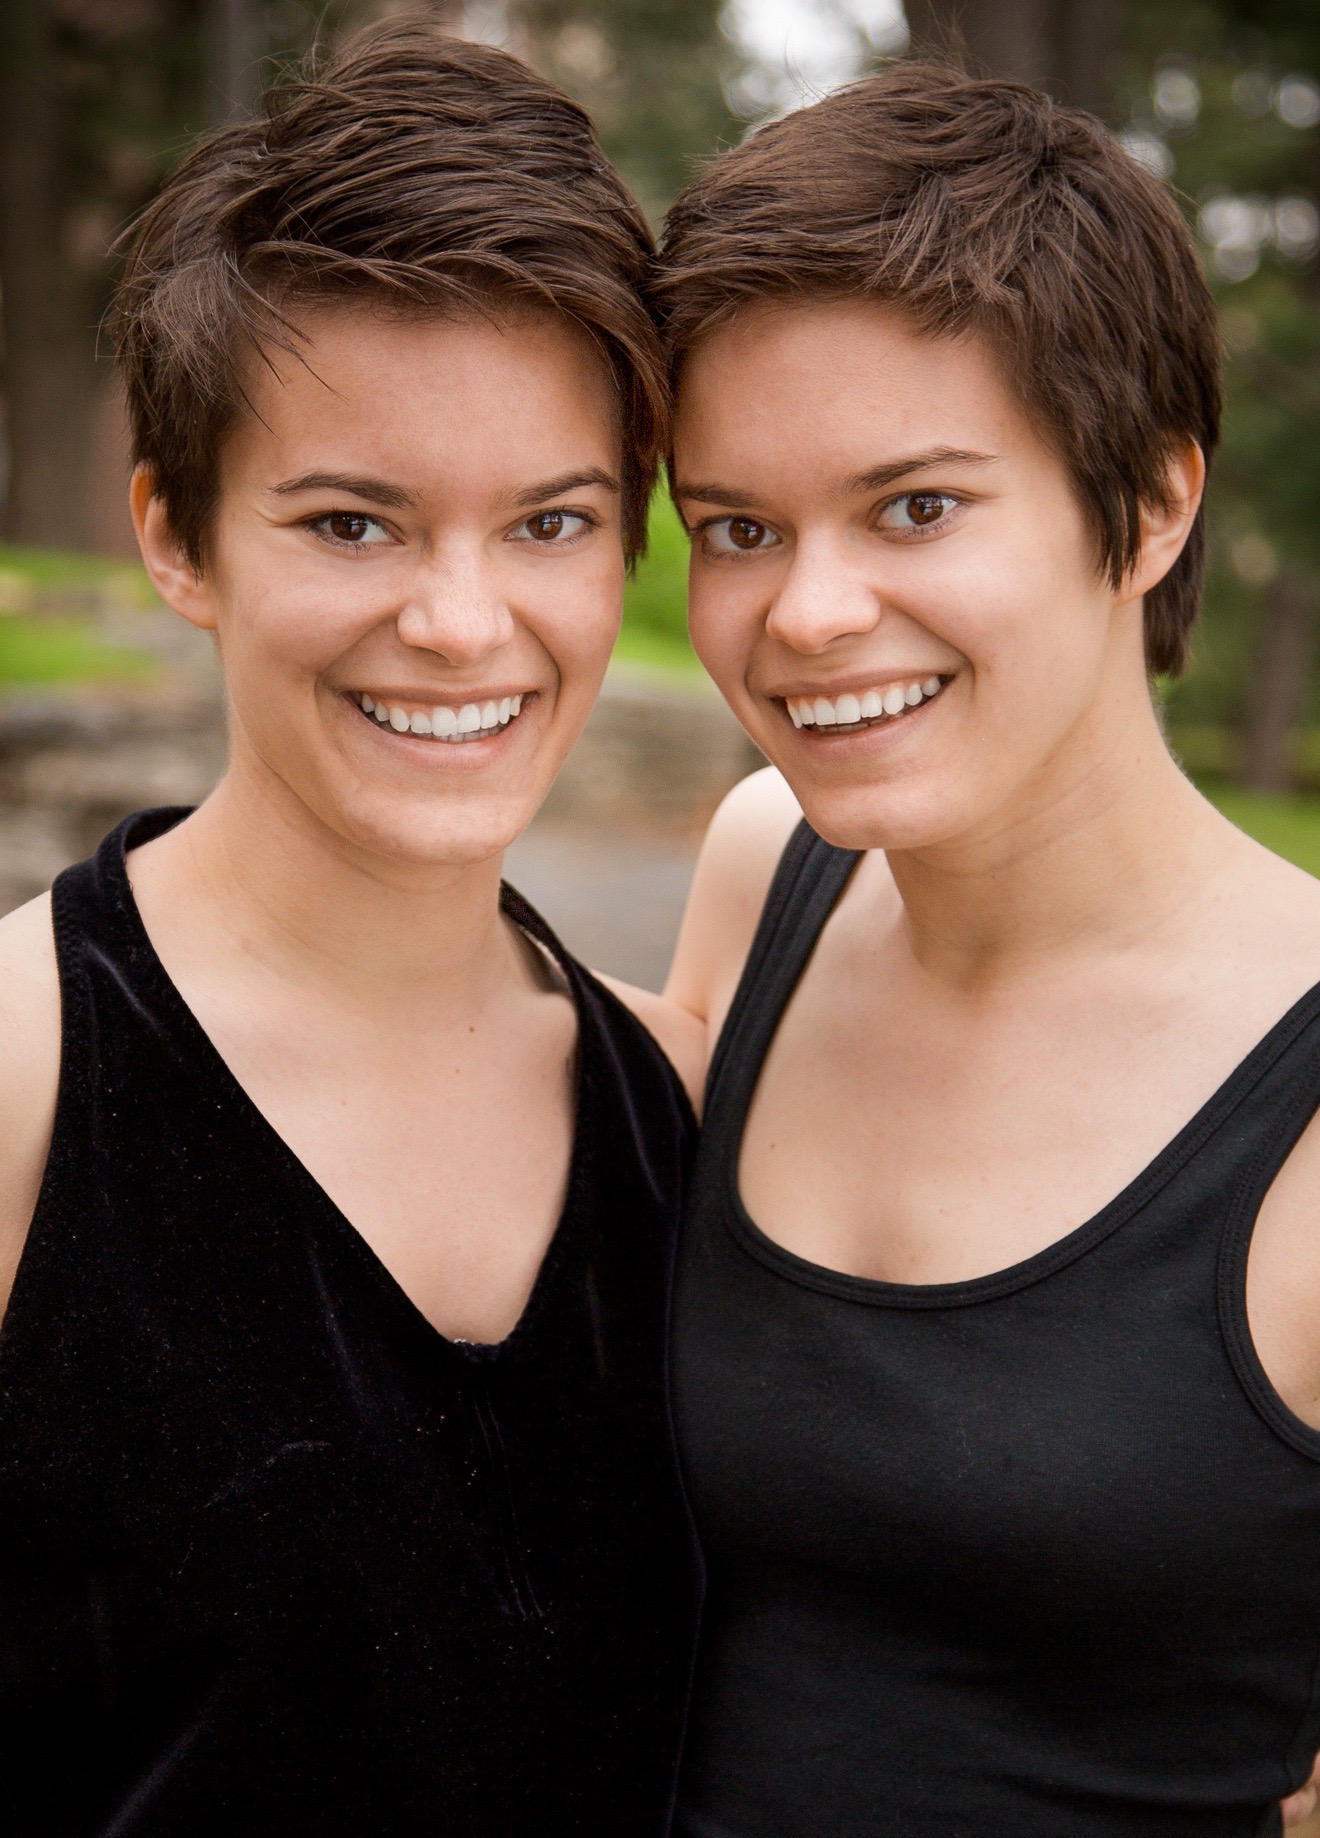 Identical twins Emily and Elizabeth Hinkler